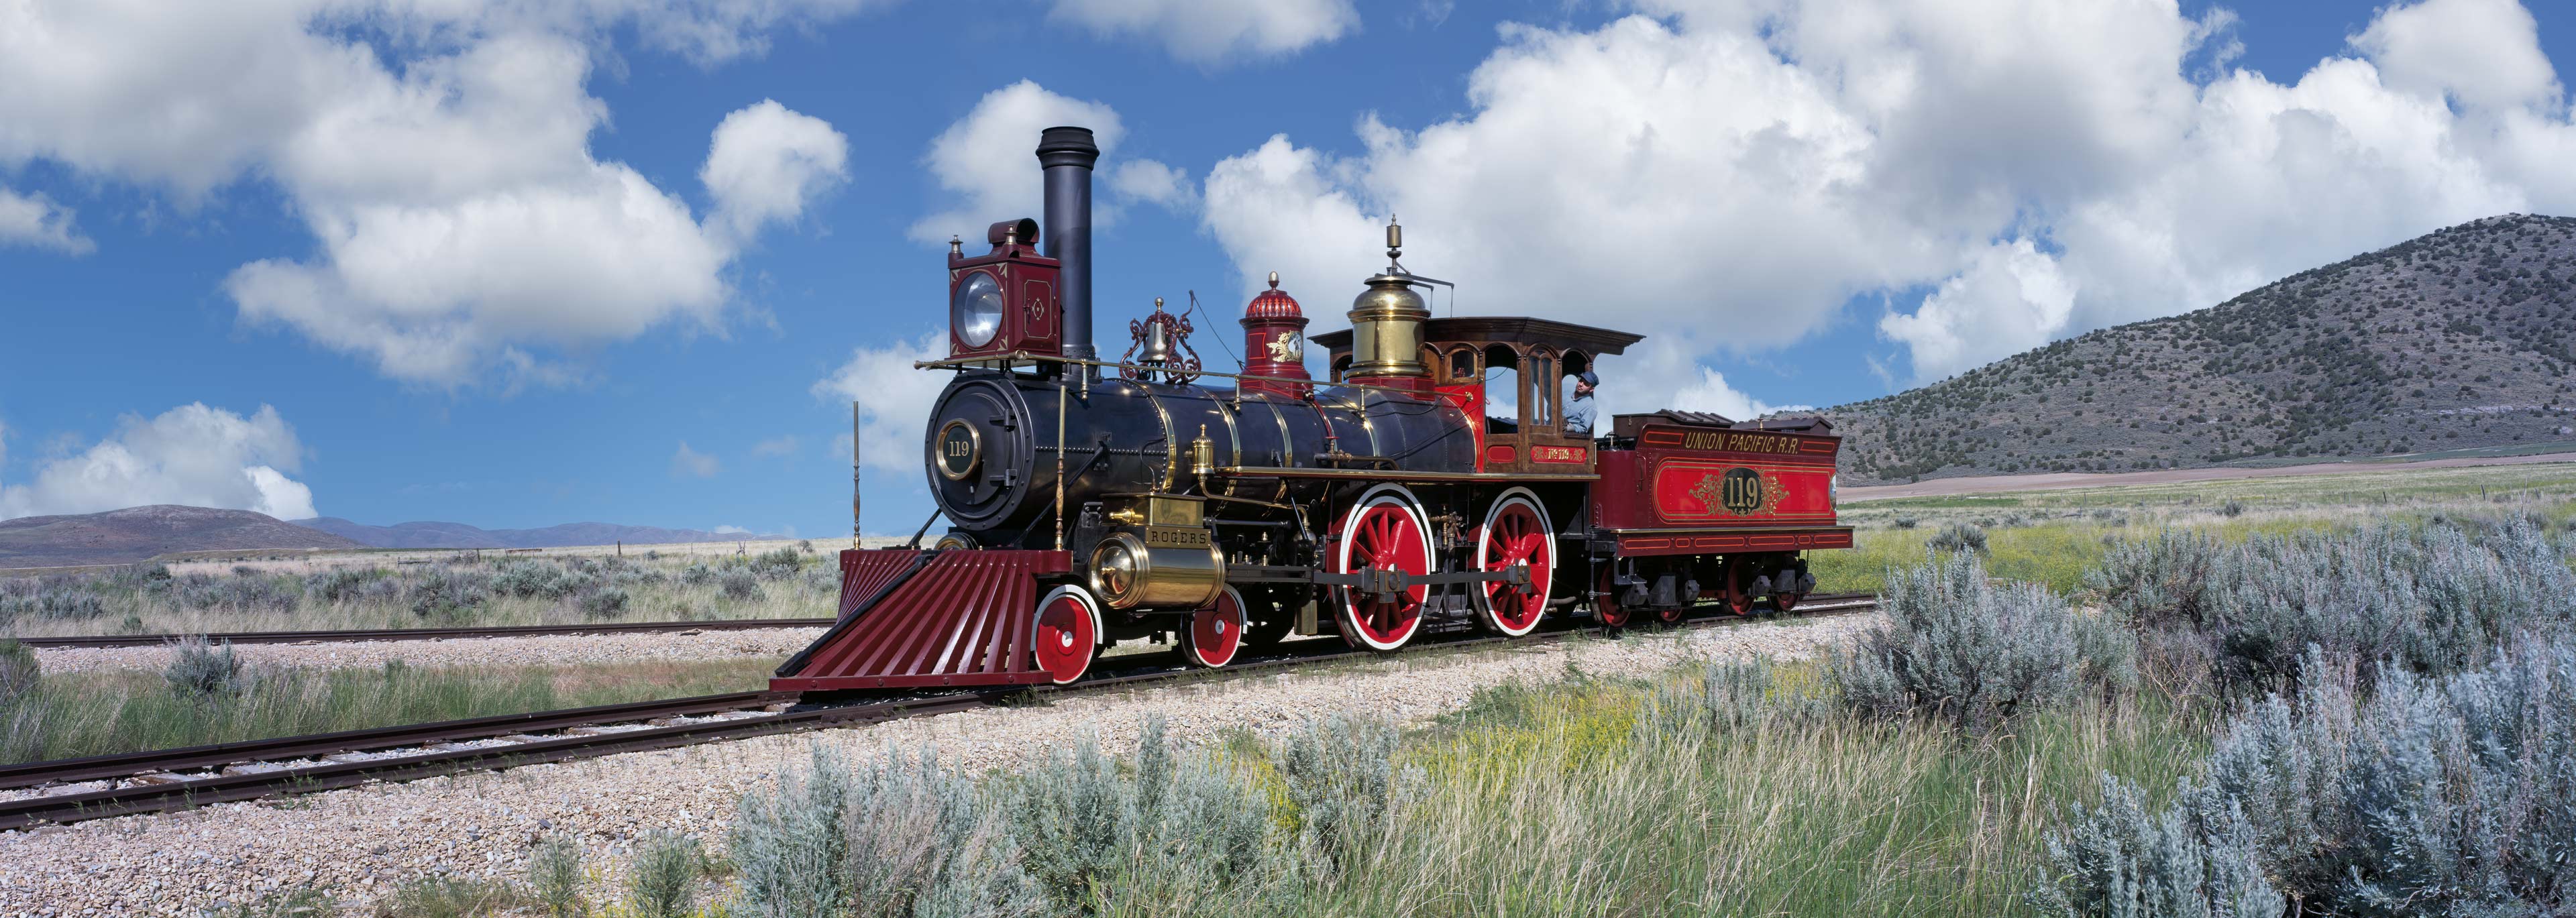 Locomotive 119, Golden Spike, Utah, USA